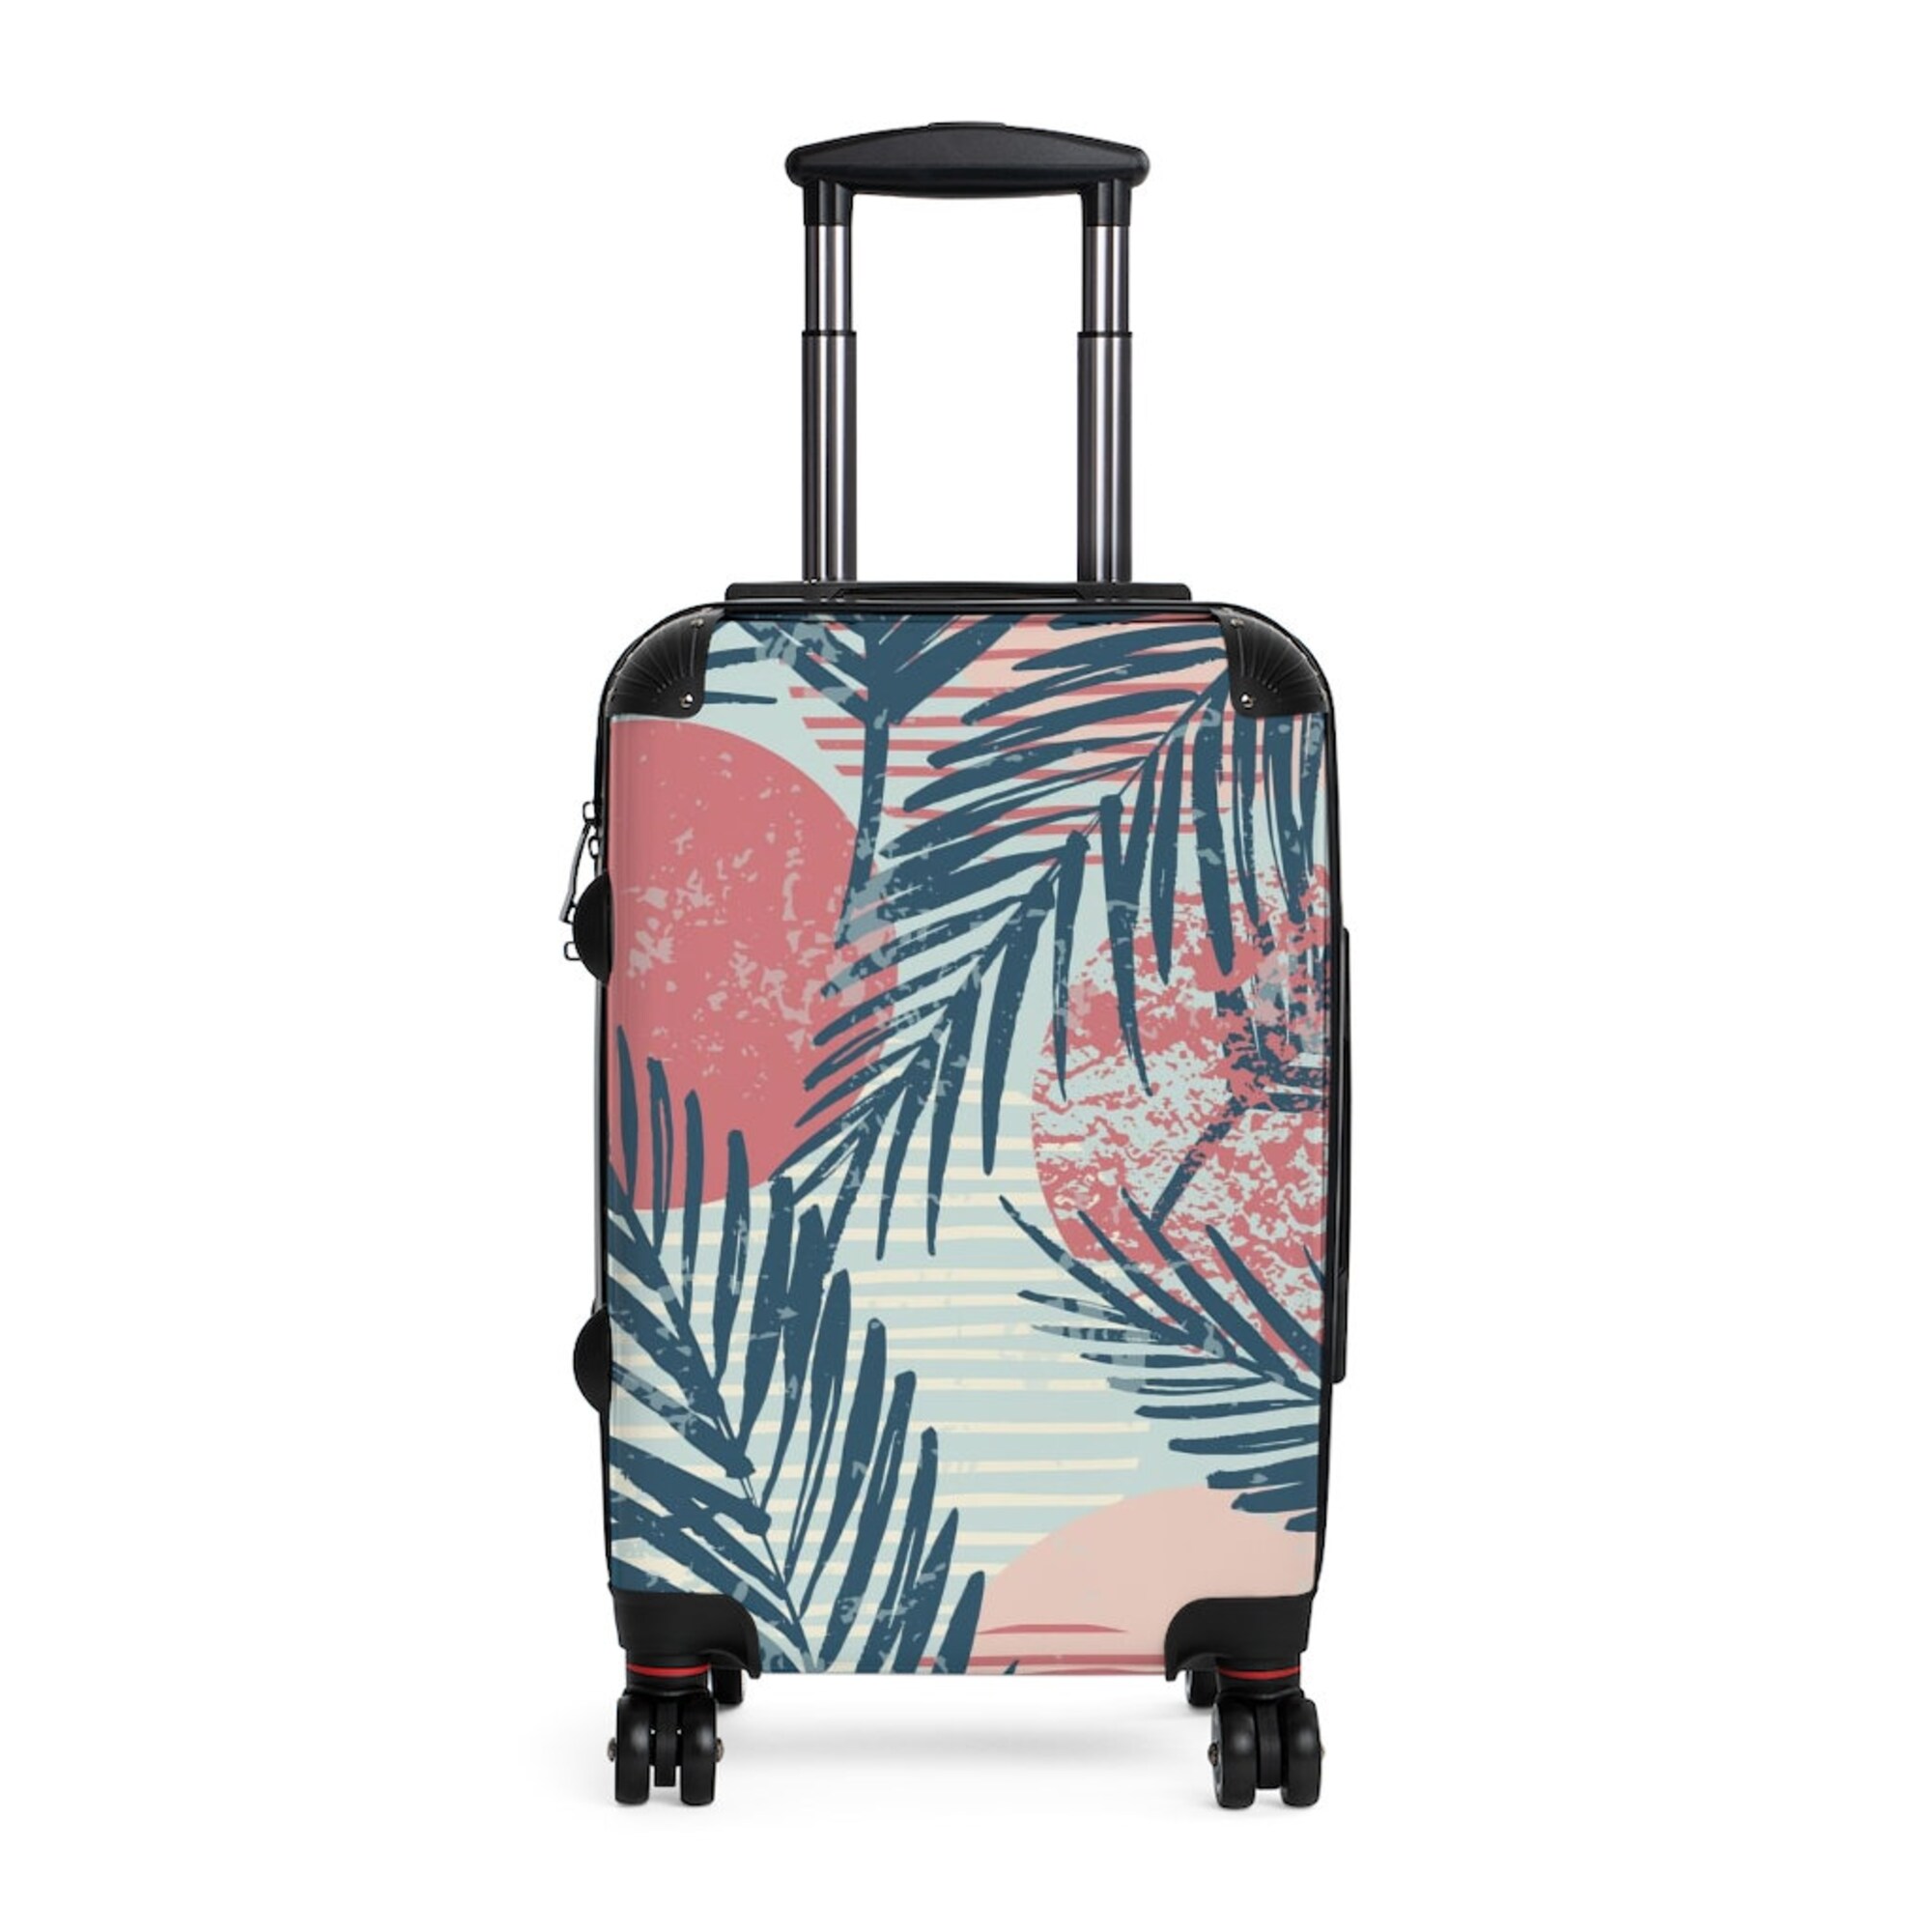 The Marina Suitcase